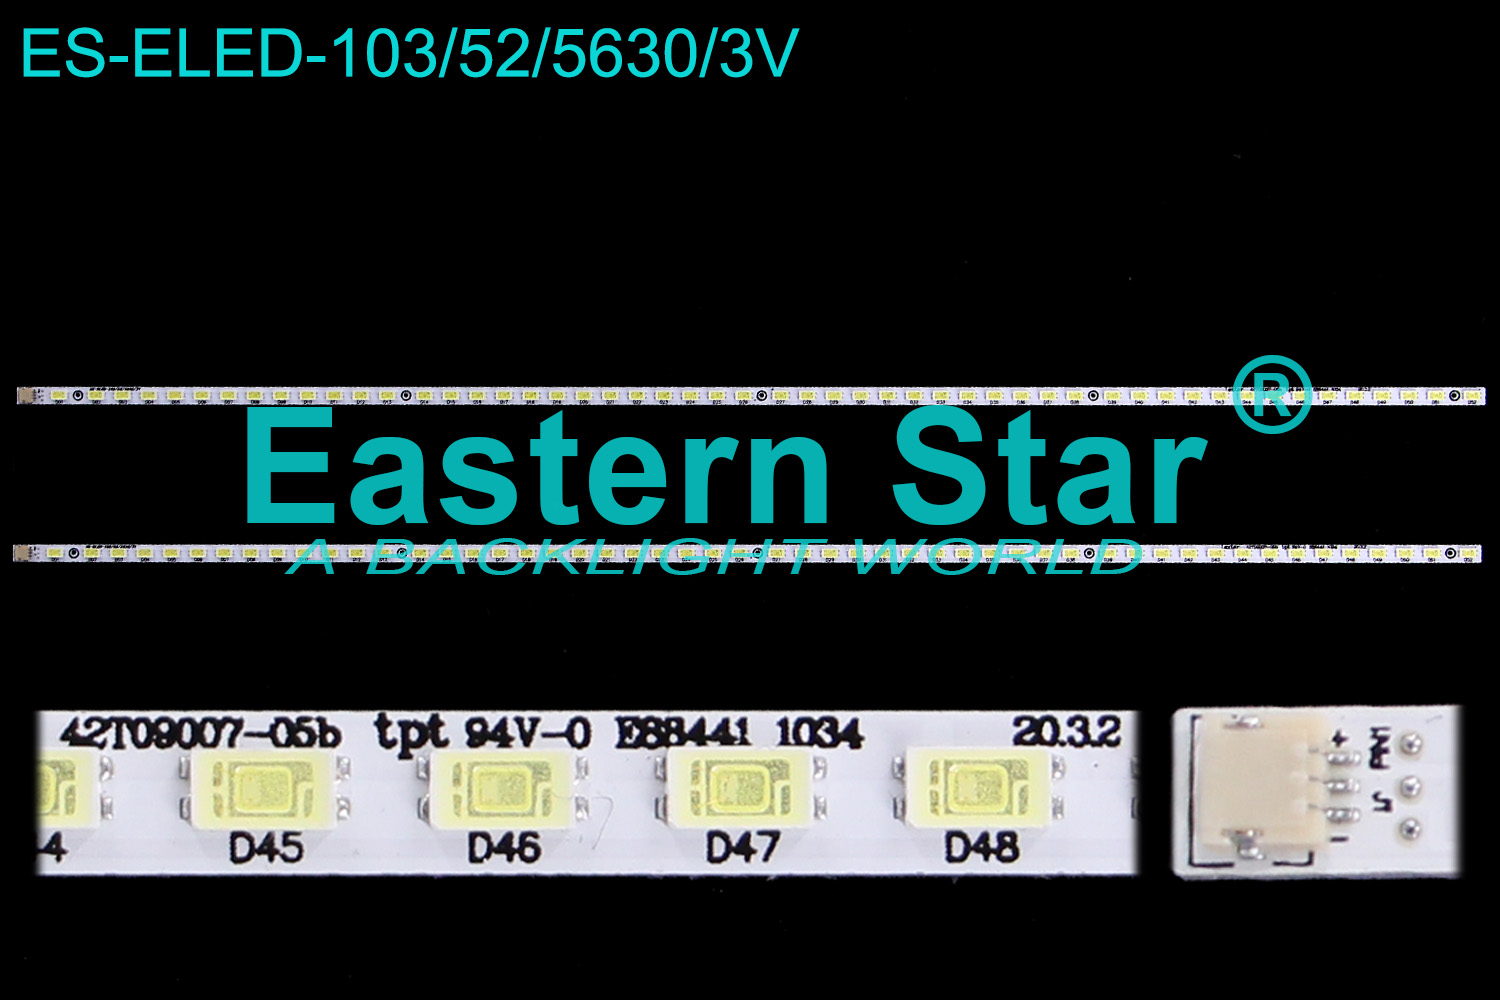 ES-ELED-103 ELED/EDGE TV backlight use for Lg/Hisense/Changhong 42'' 52LEDs Lextar 42T09-05b led strips(2/4)